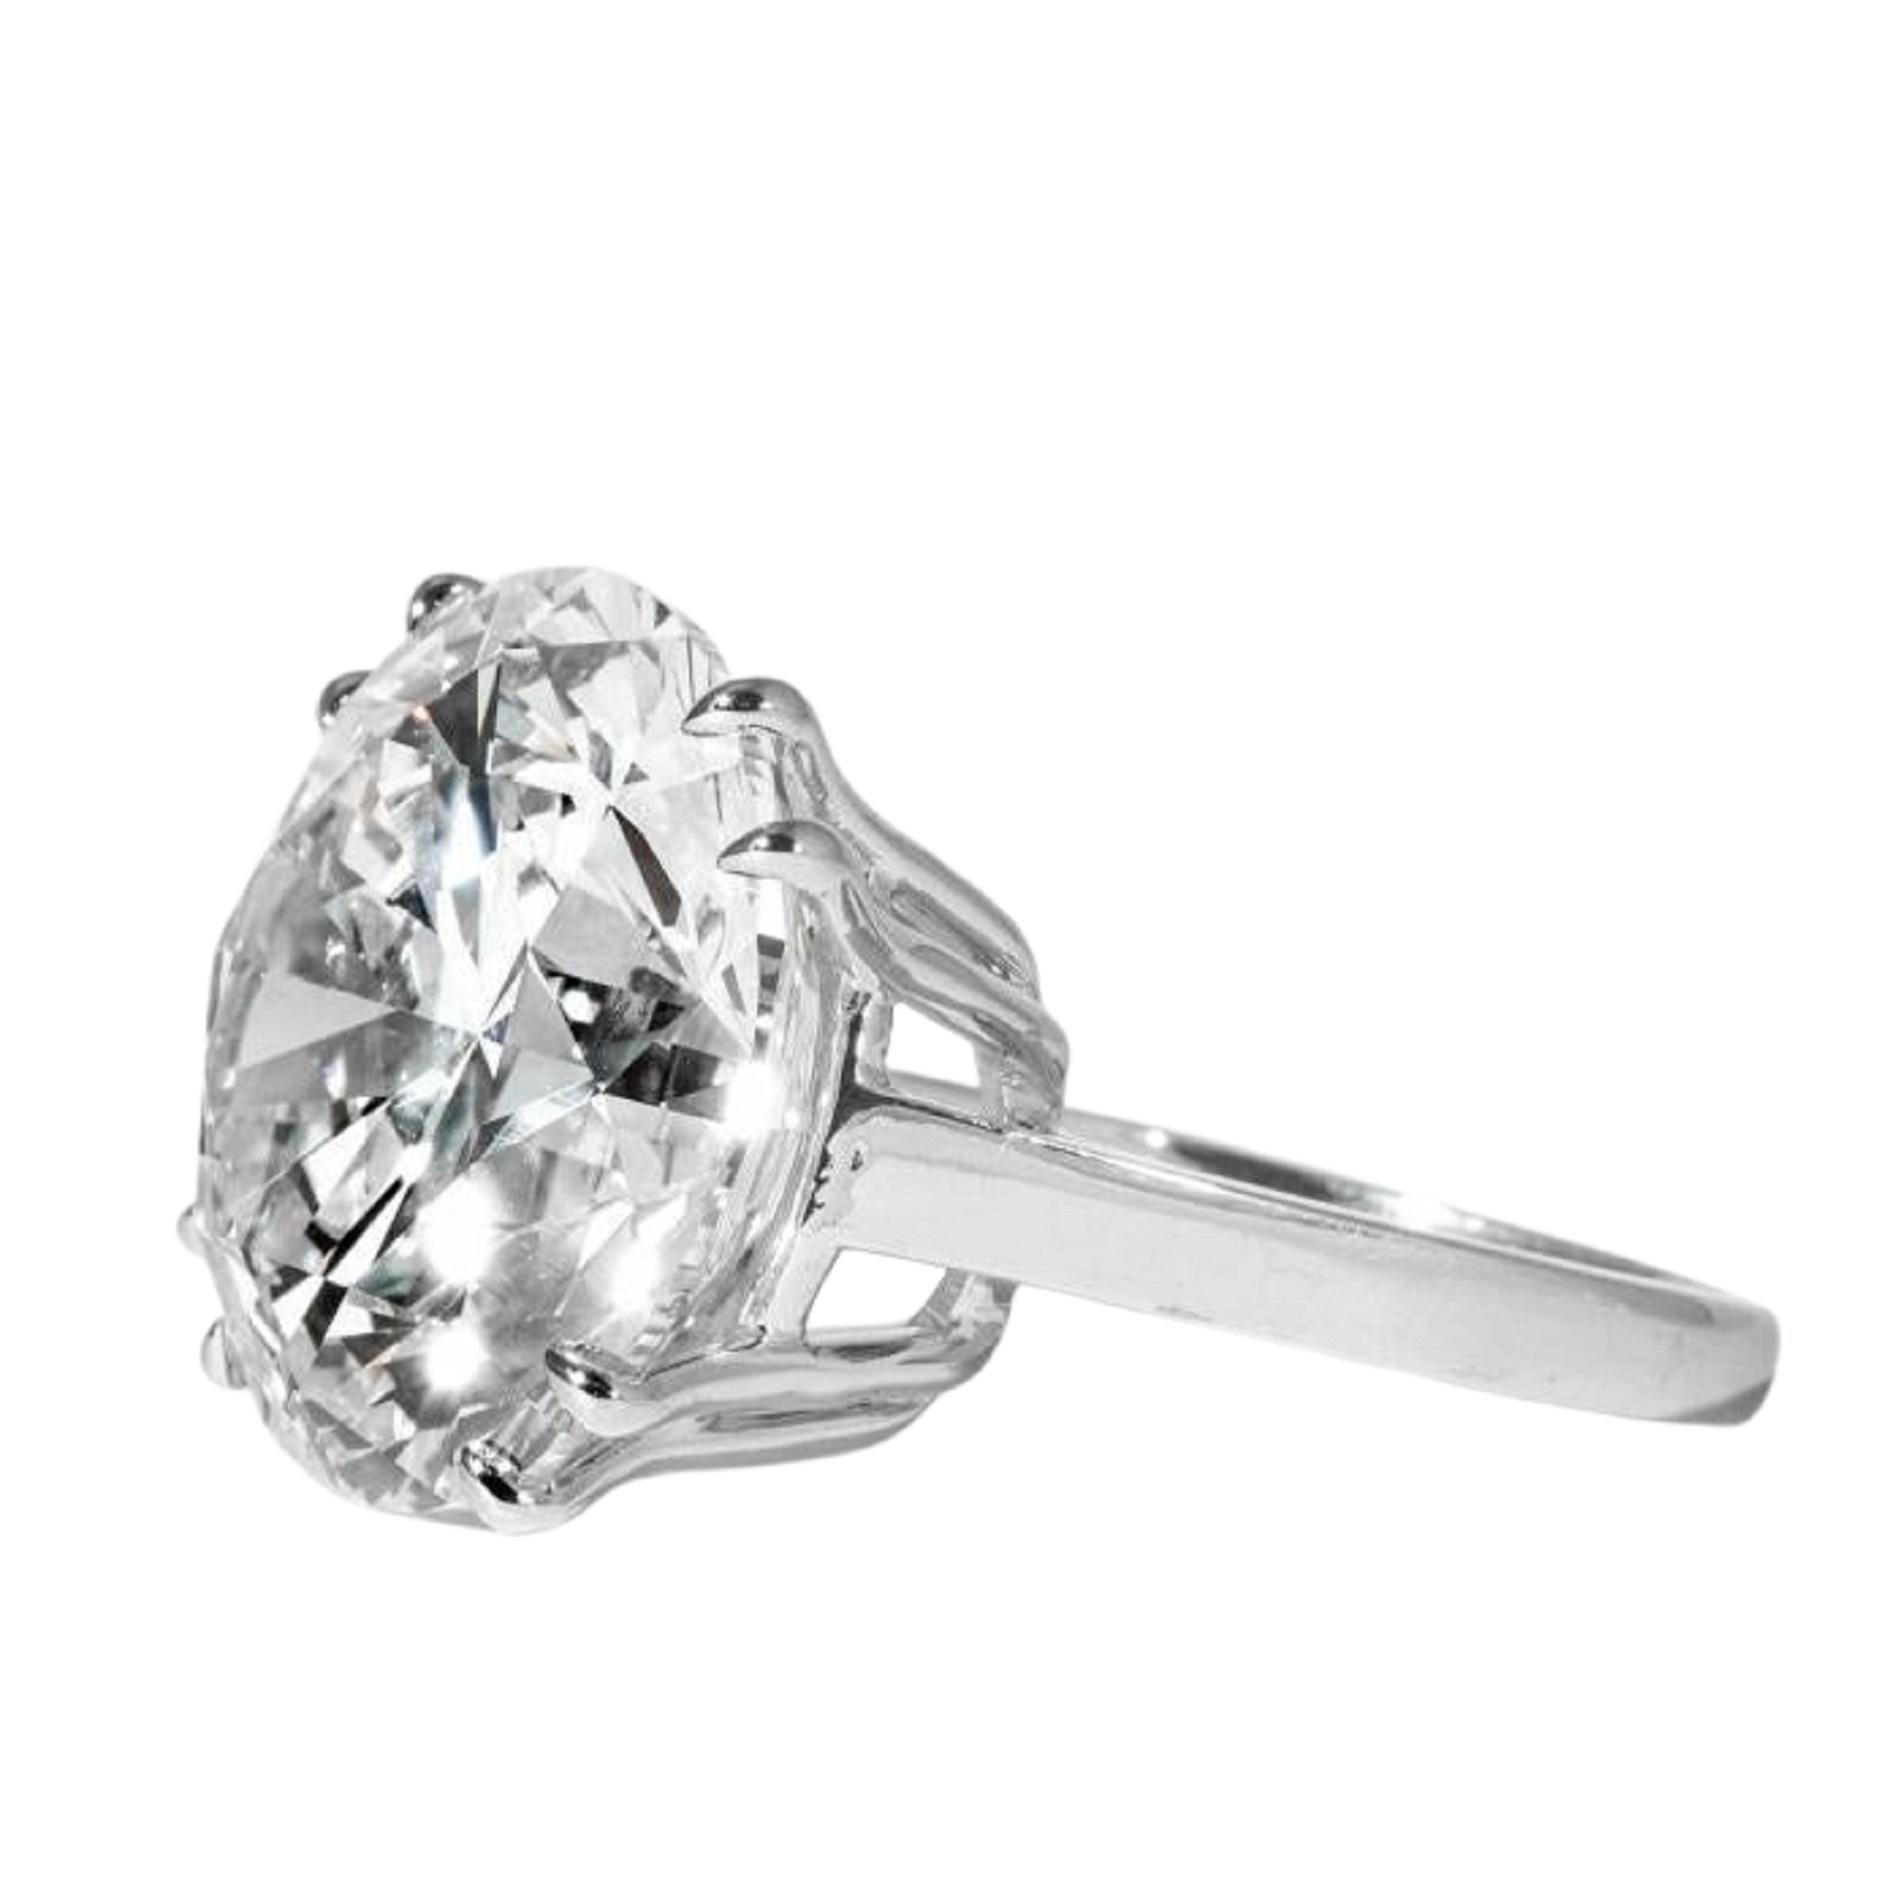 10 carat diamond ring on finger